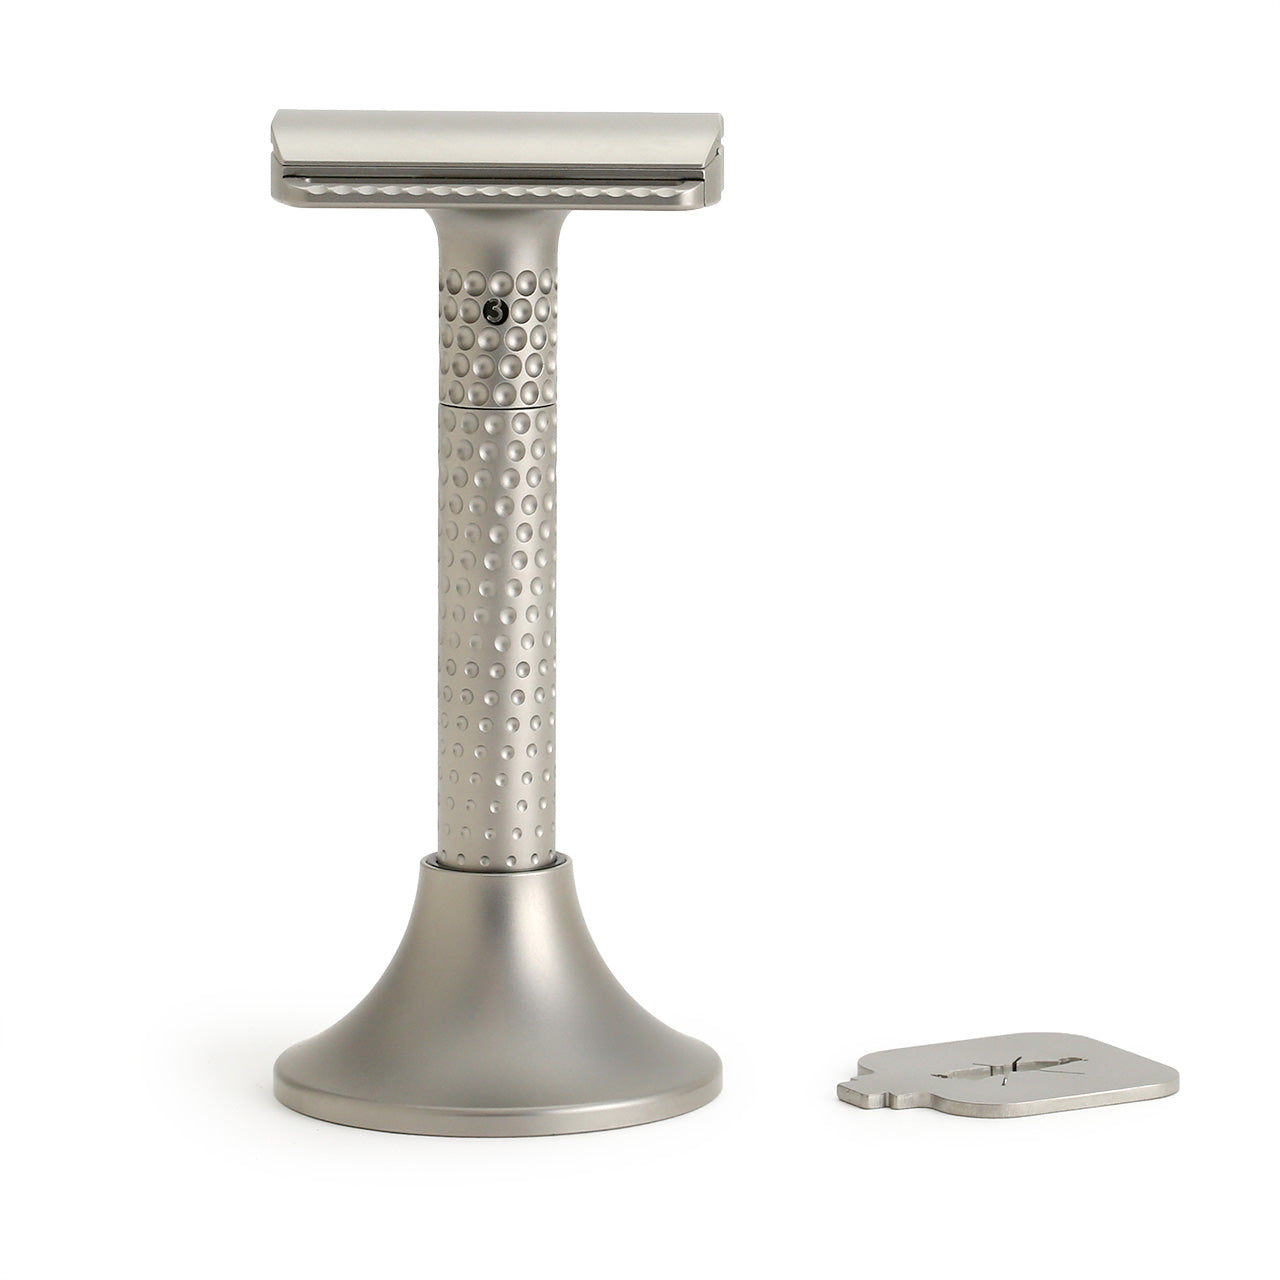 Tatara Muramasa Adjustable razor in its stand with tool